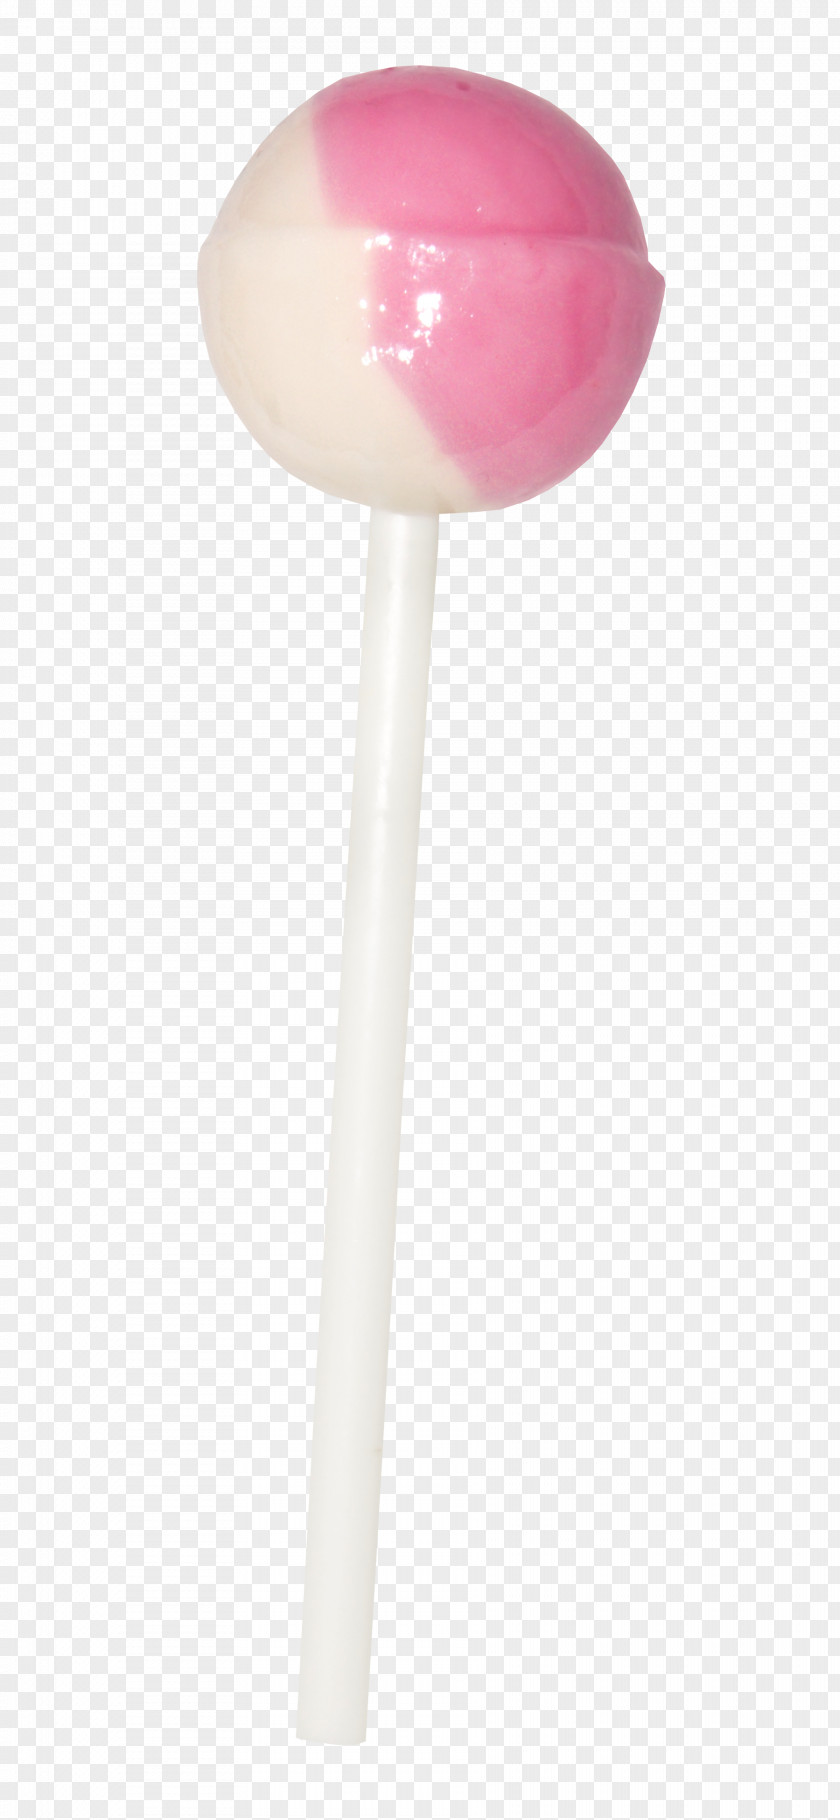 Pretty Pink Lollipop Sweetness Dessert Candy PNG